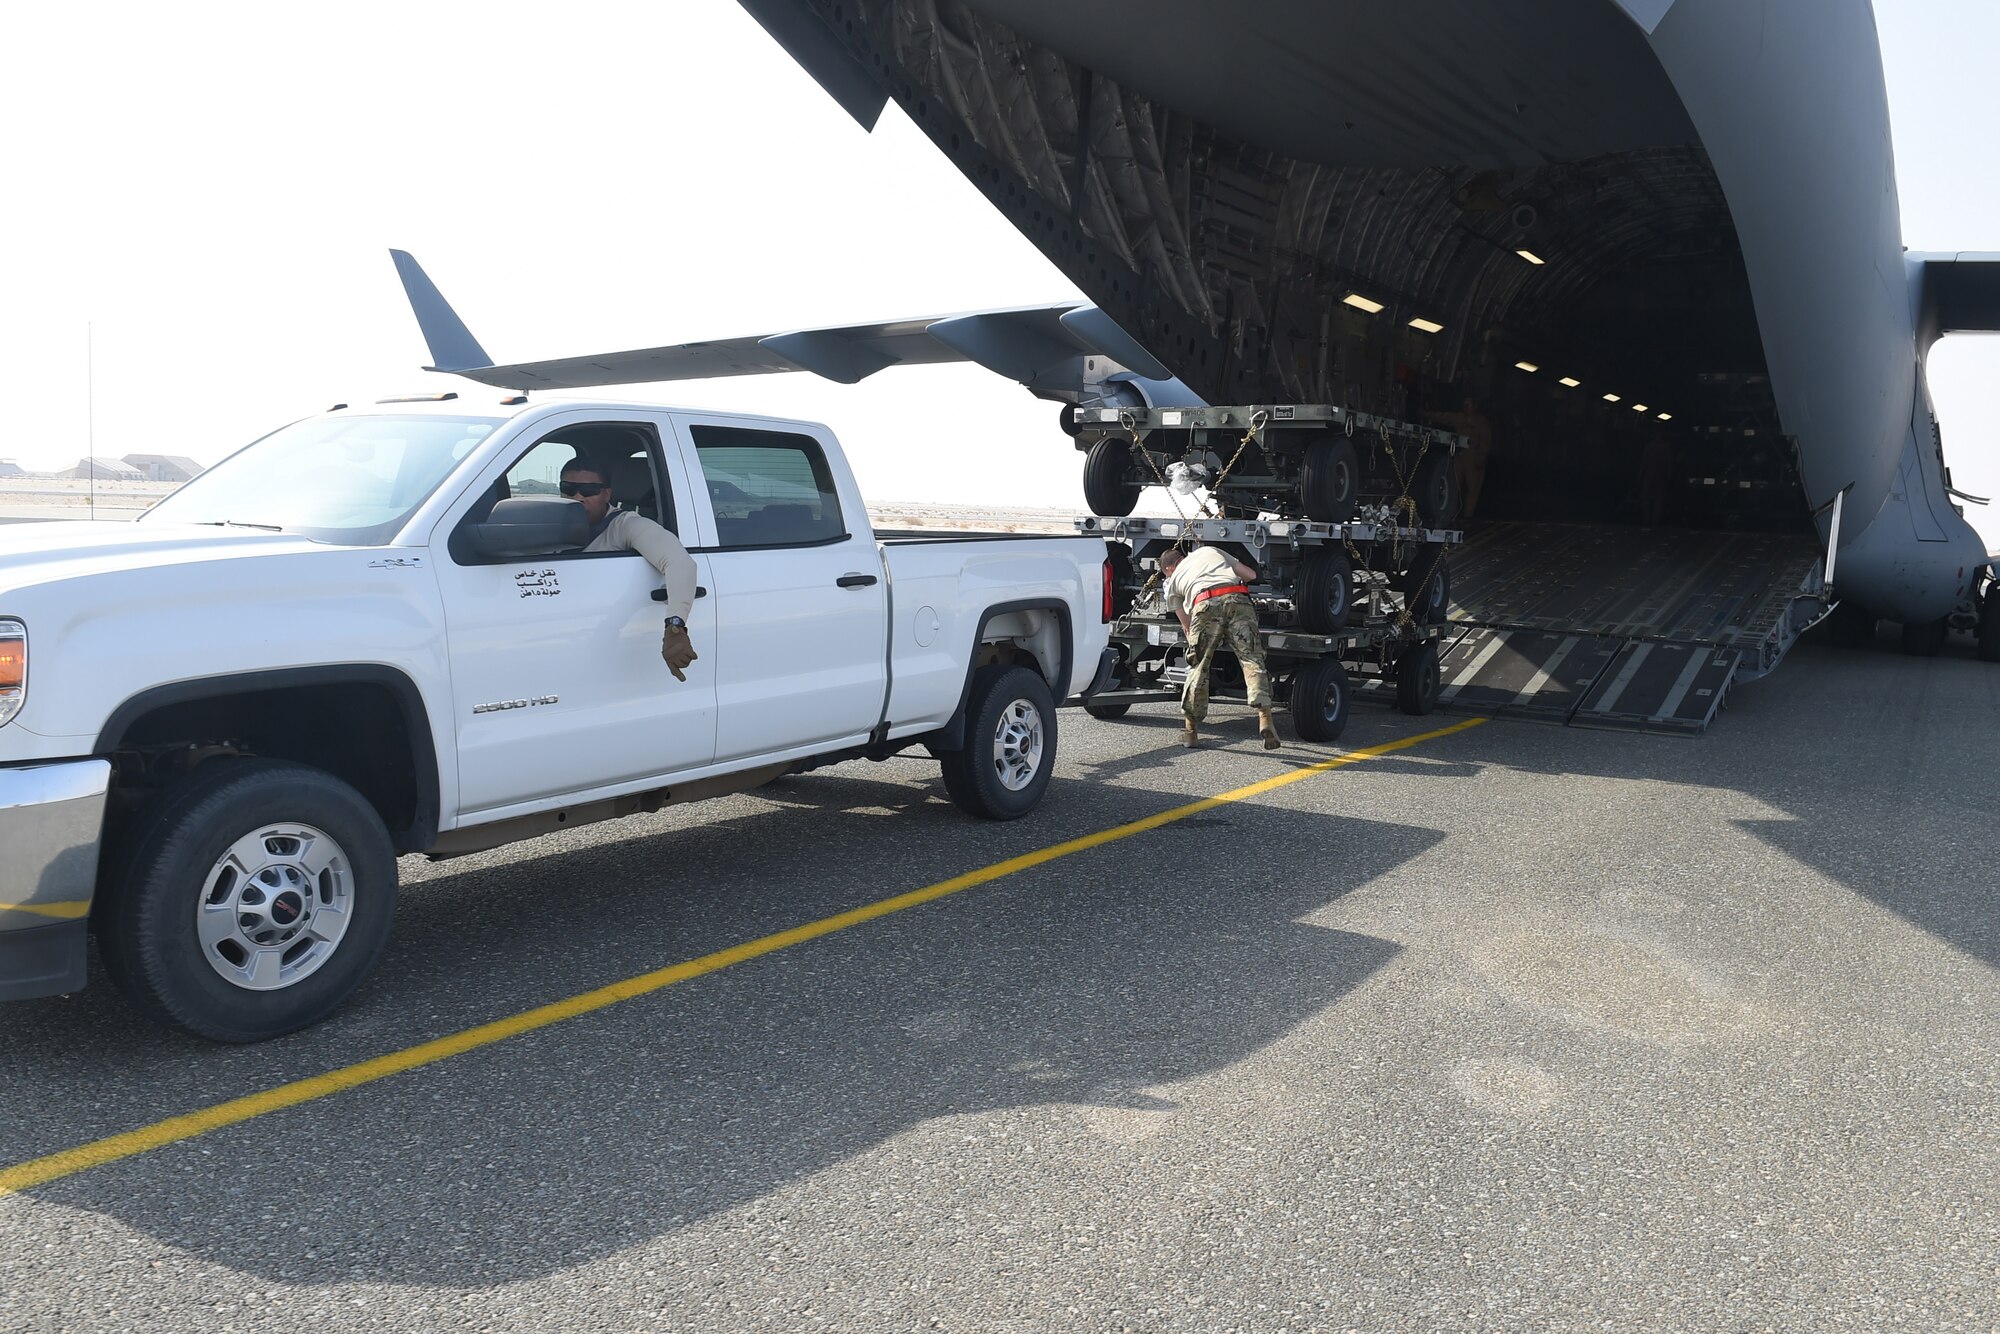 Airmen unload cargo from a C-17